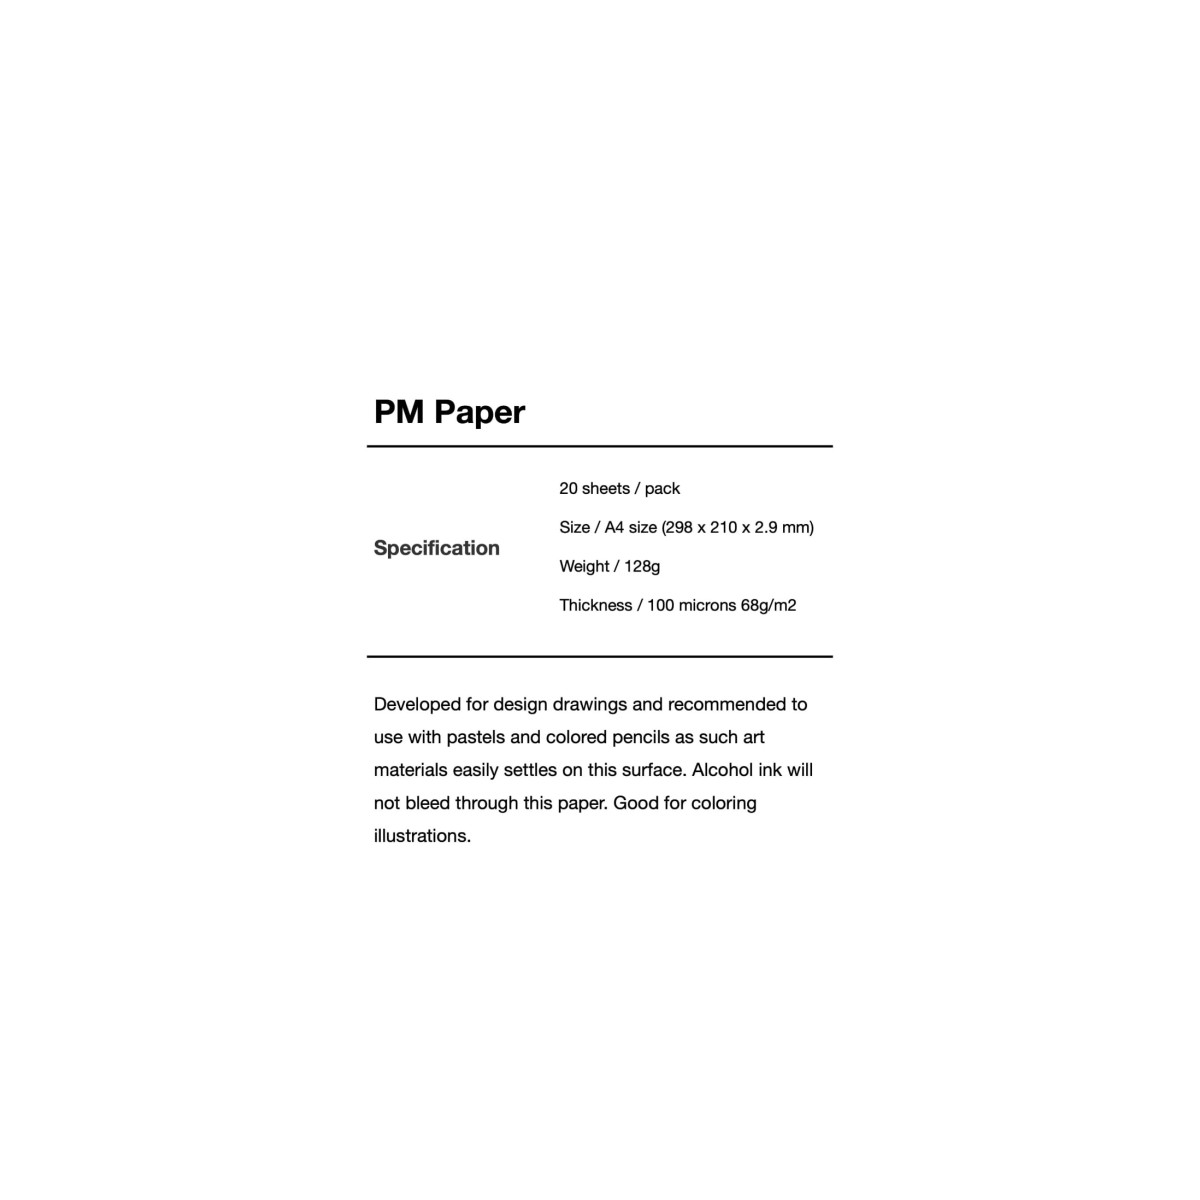 Copic PM Paper 68g/m2